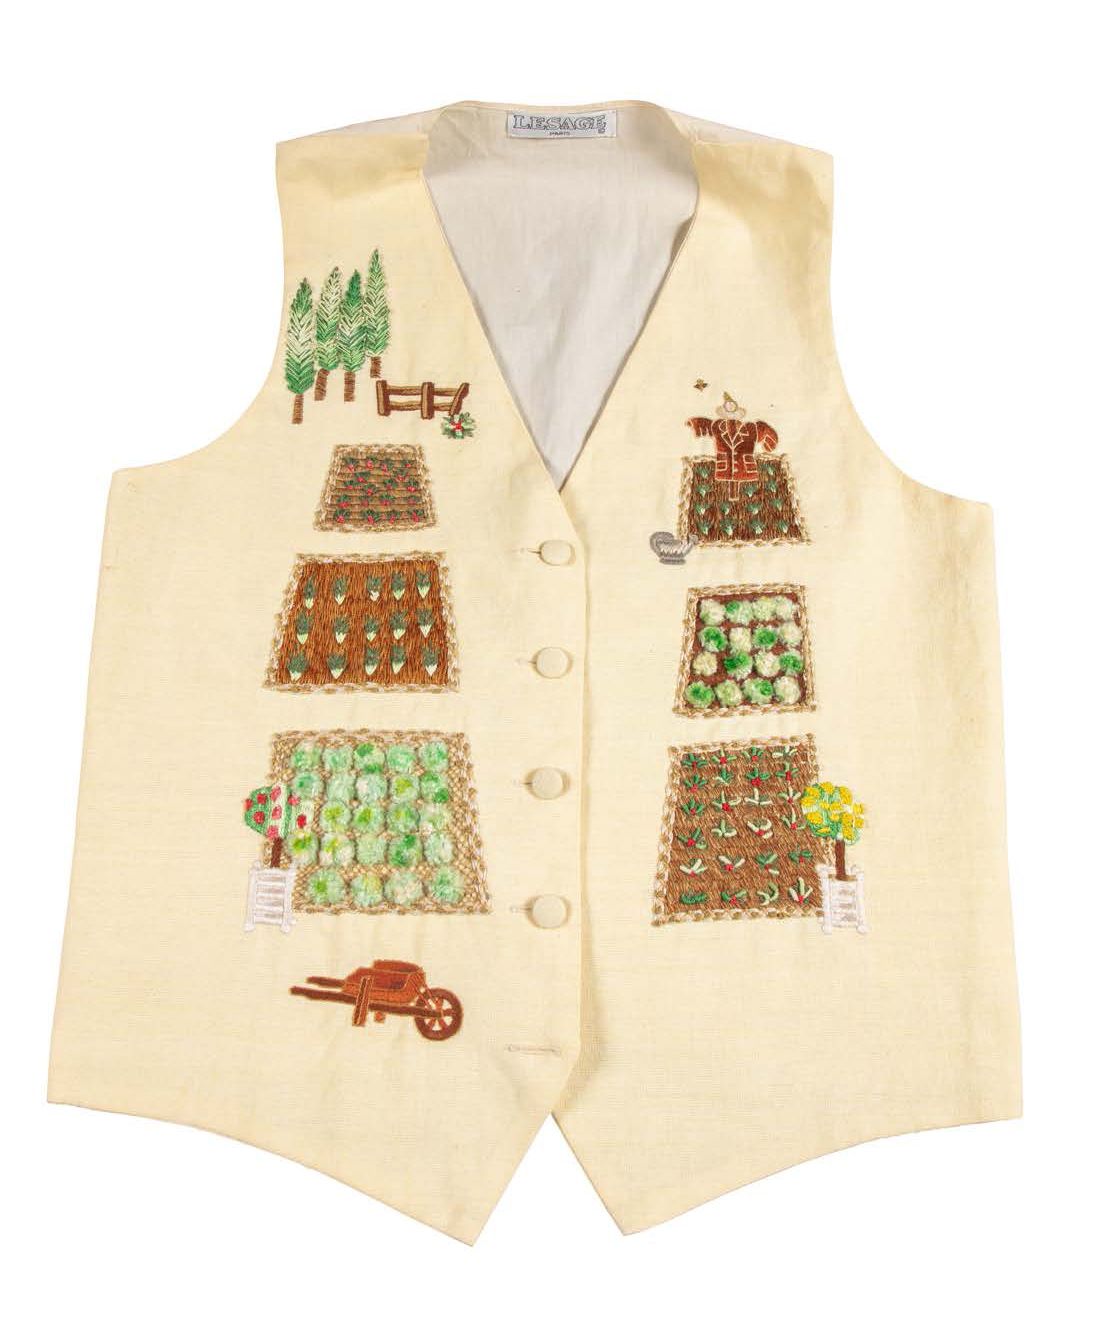 LESAGE Paris Cotton vest embroidered with vegetable garden and farm scenes